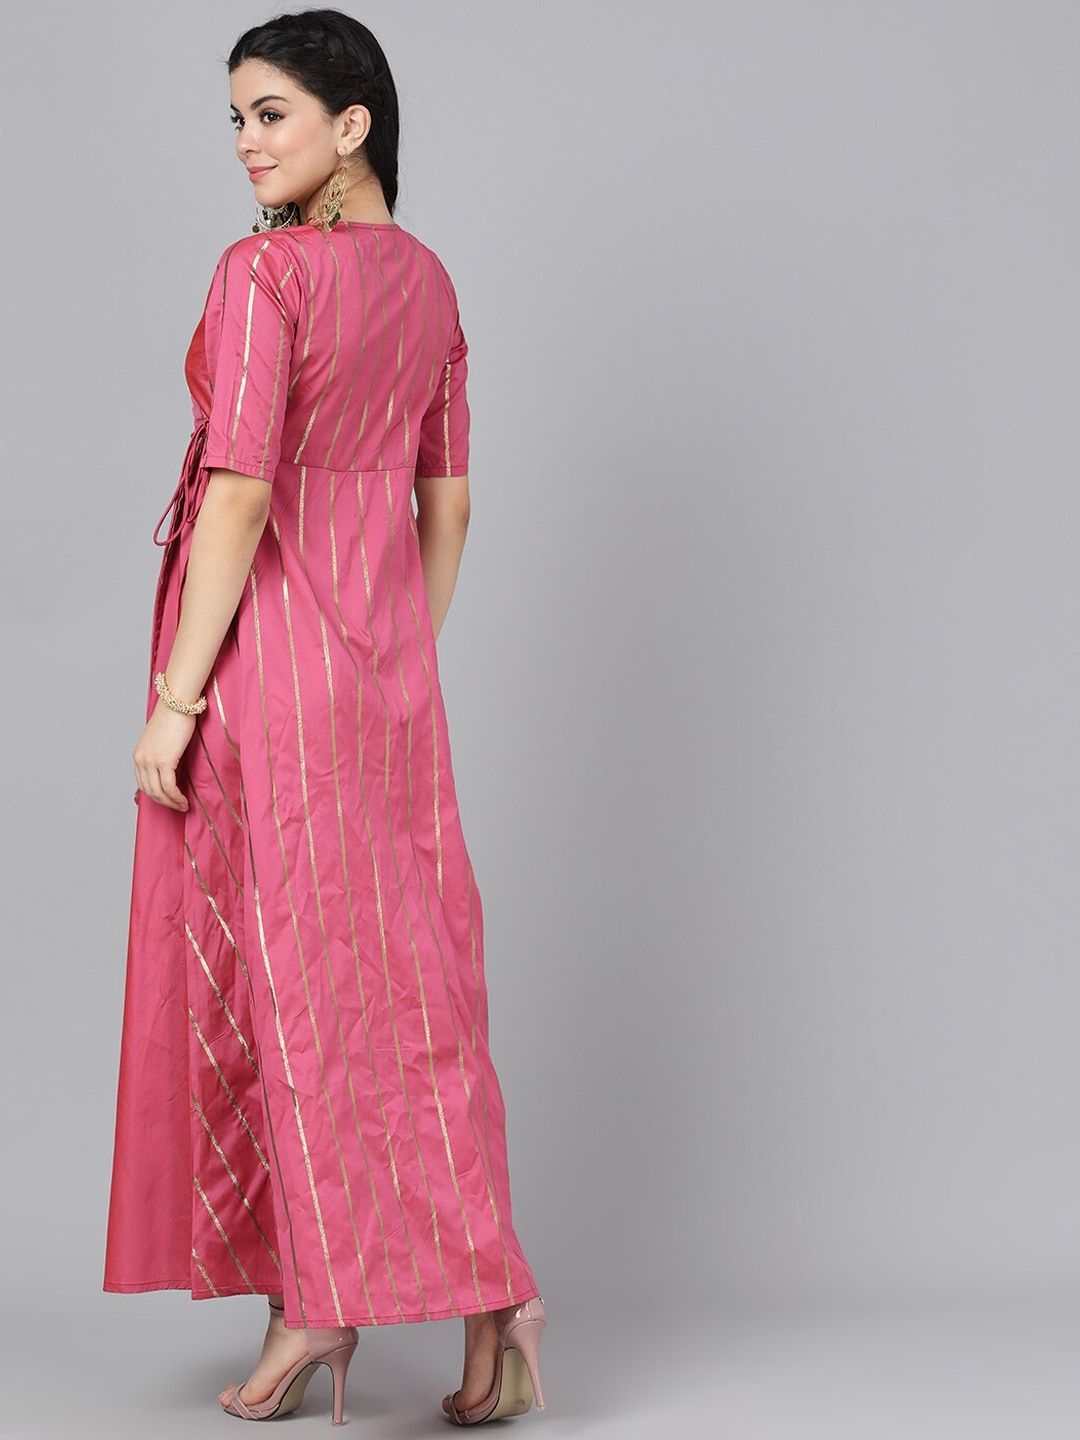 Women's  Pink Printed Maxi Dress - AKS